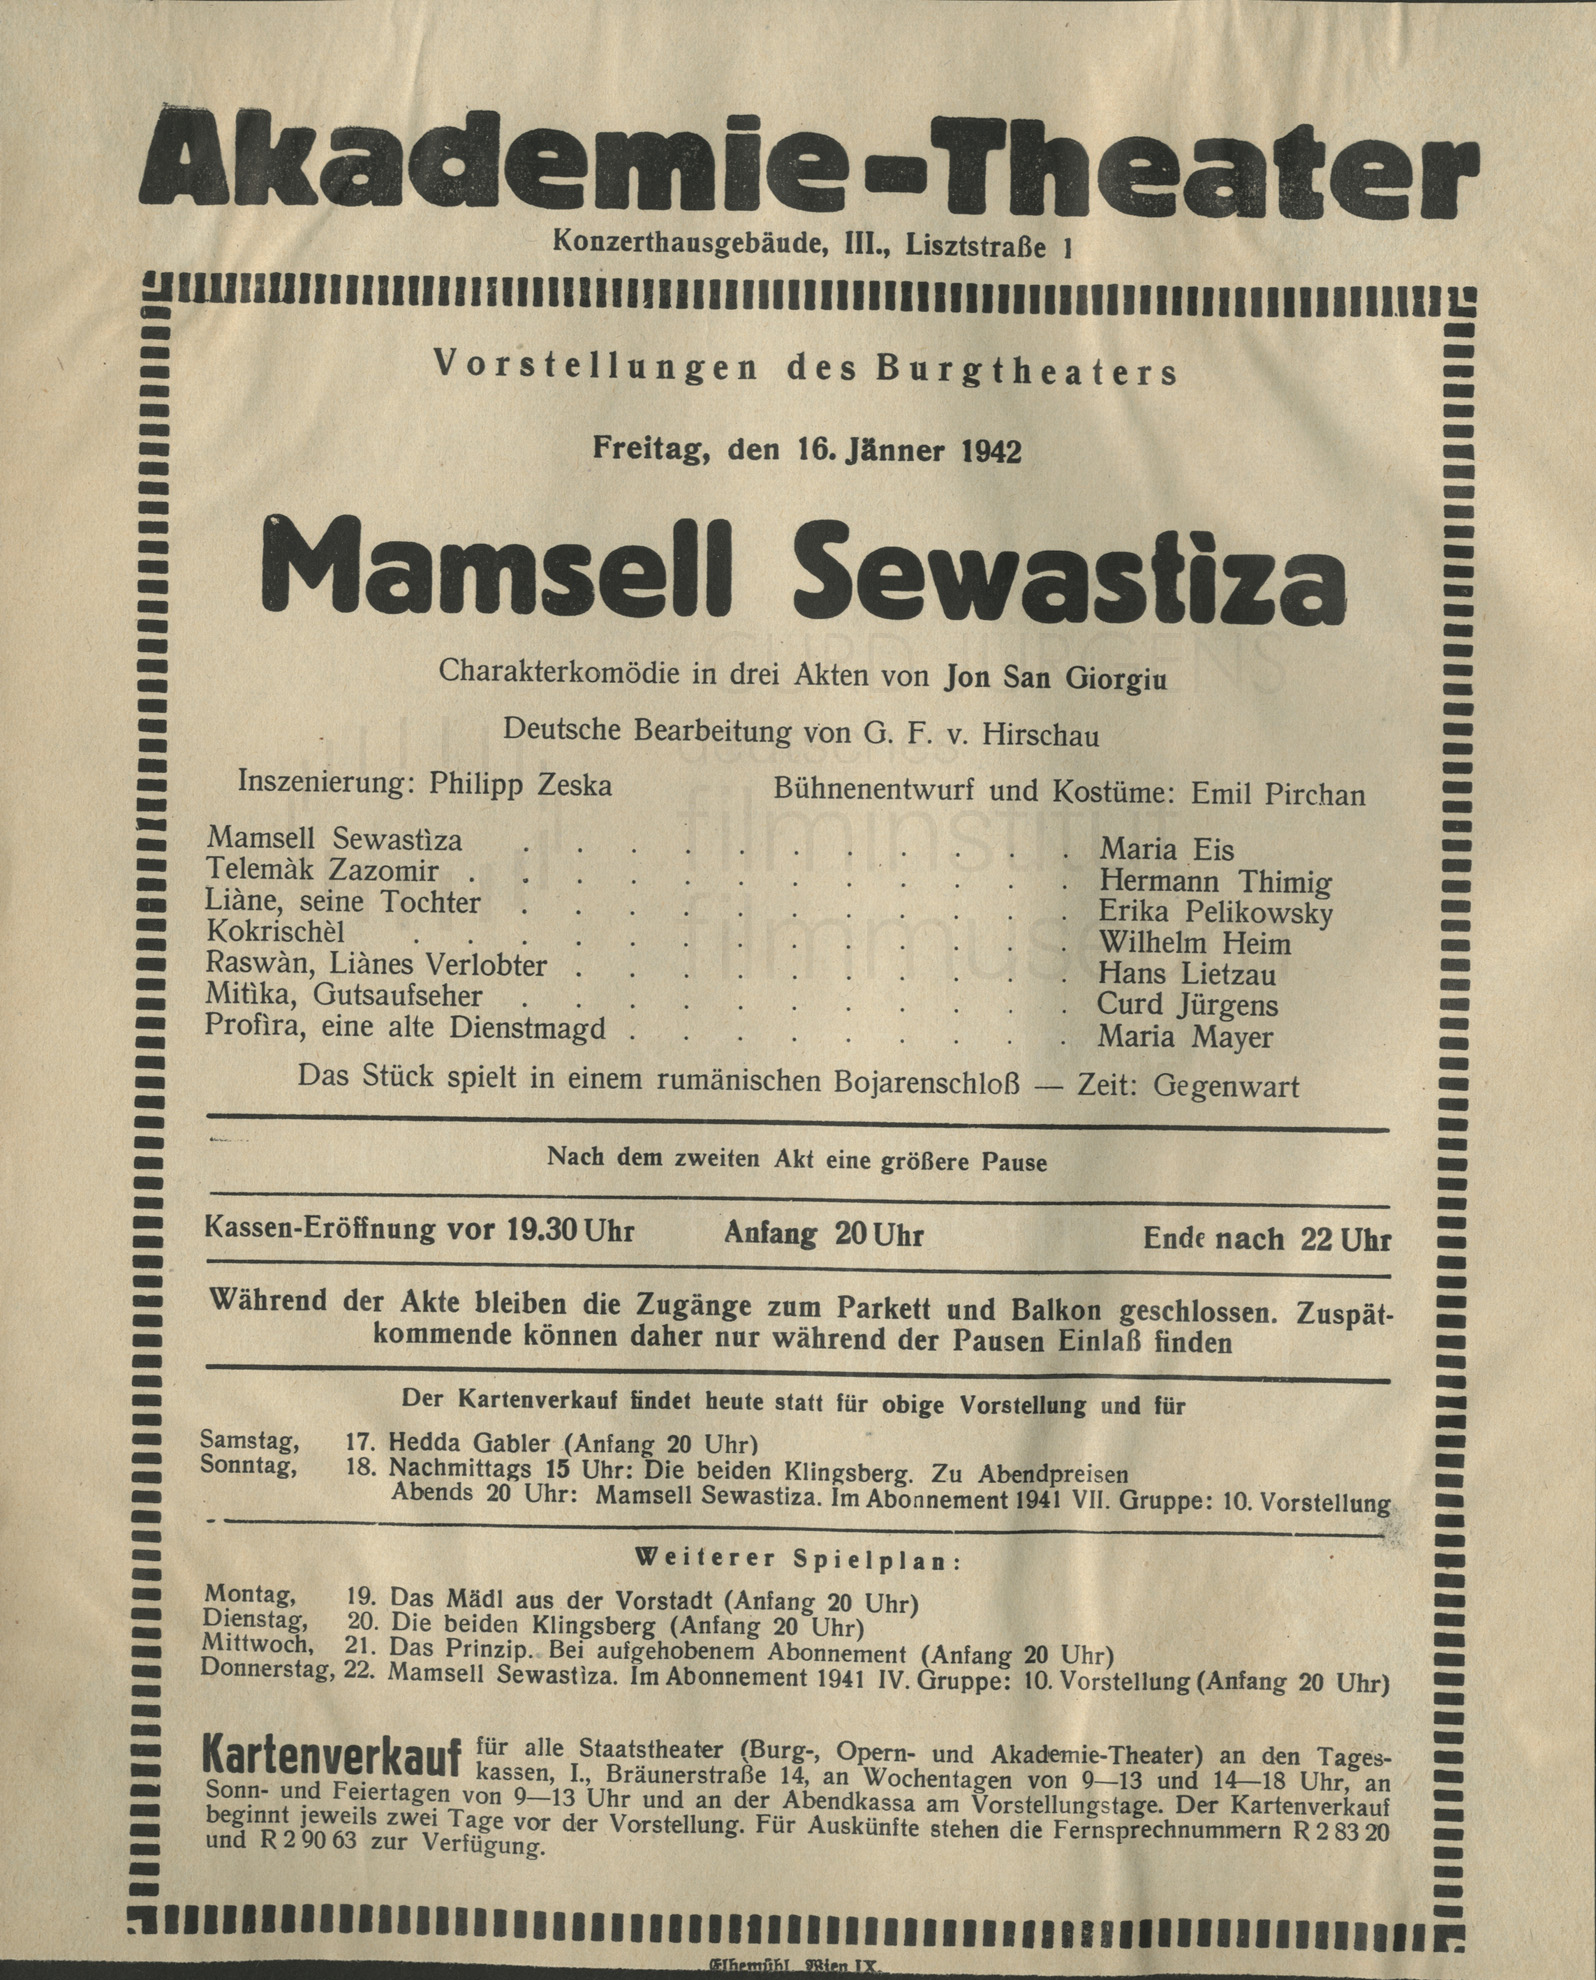 "Mamsell Sewastiza"